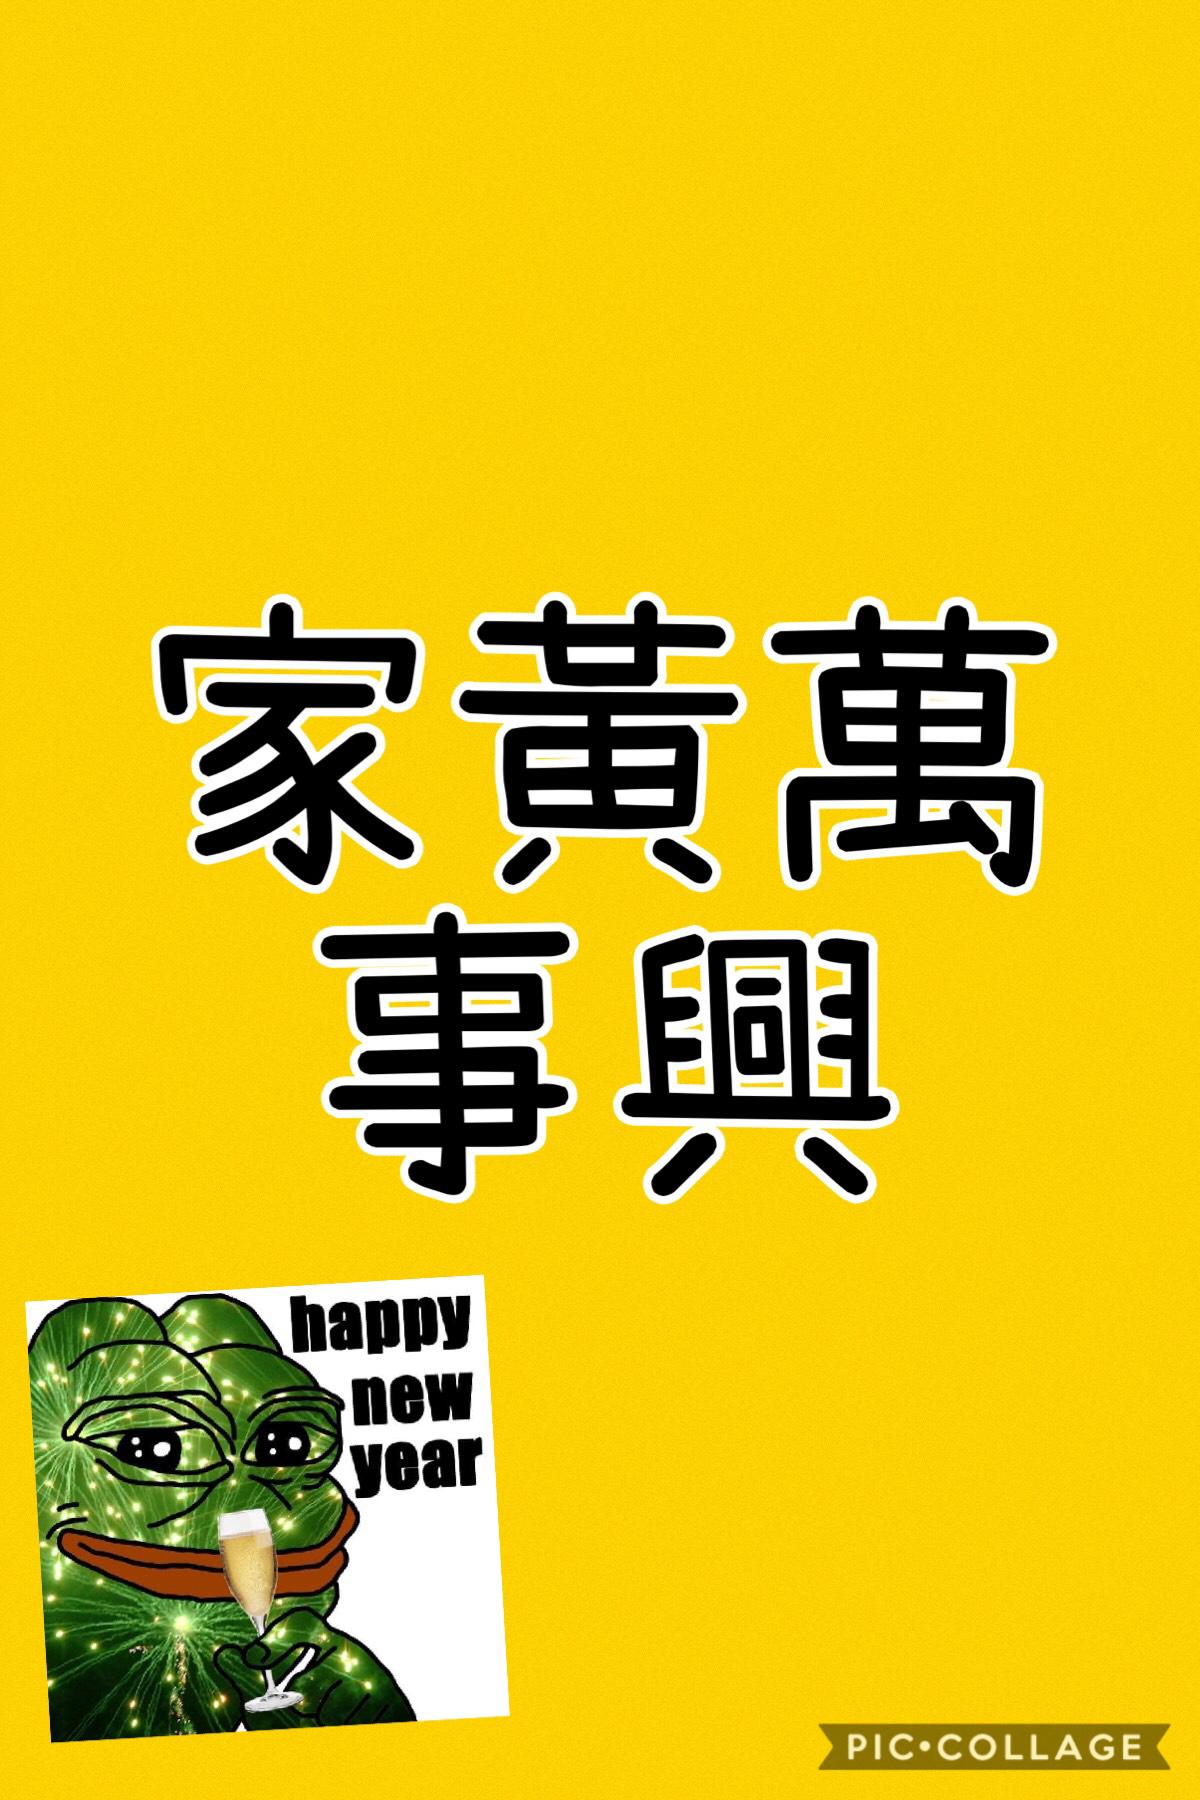 Happy new year 
家黃萬事興